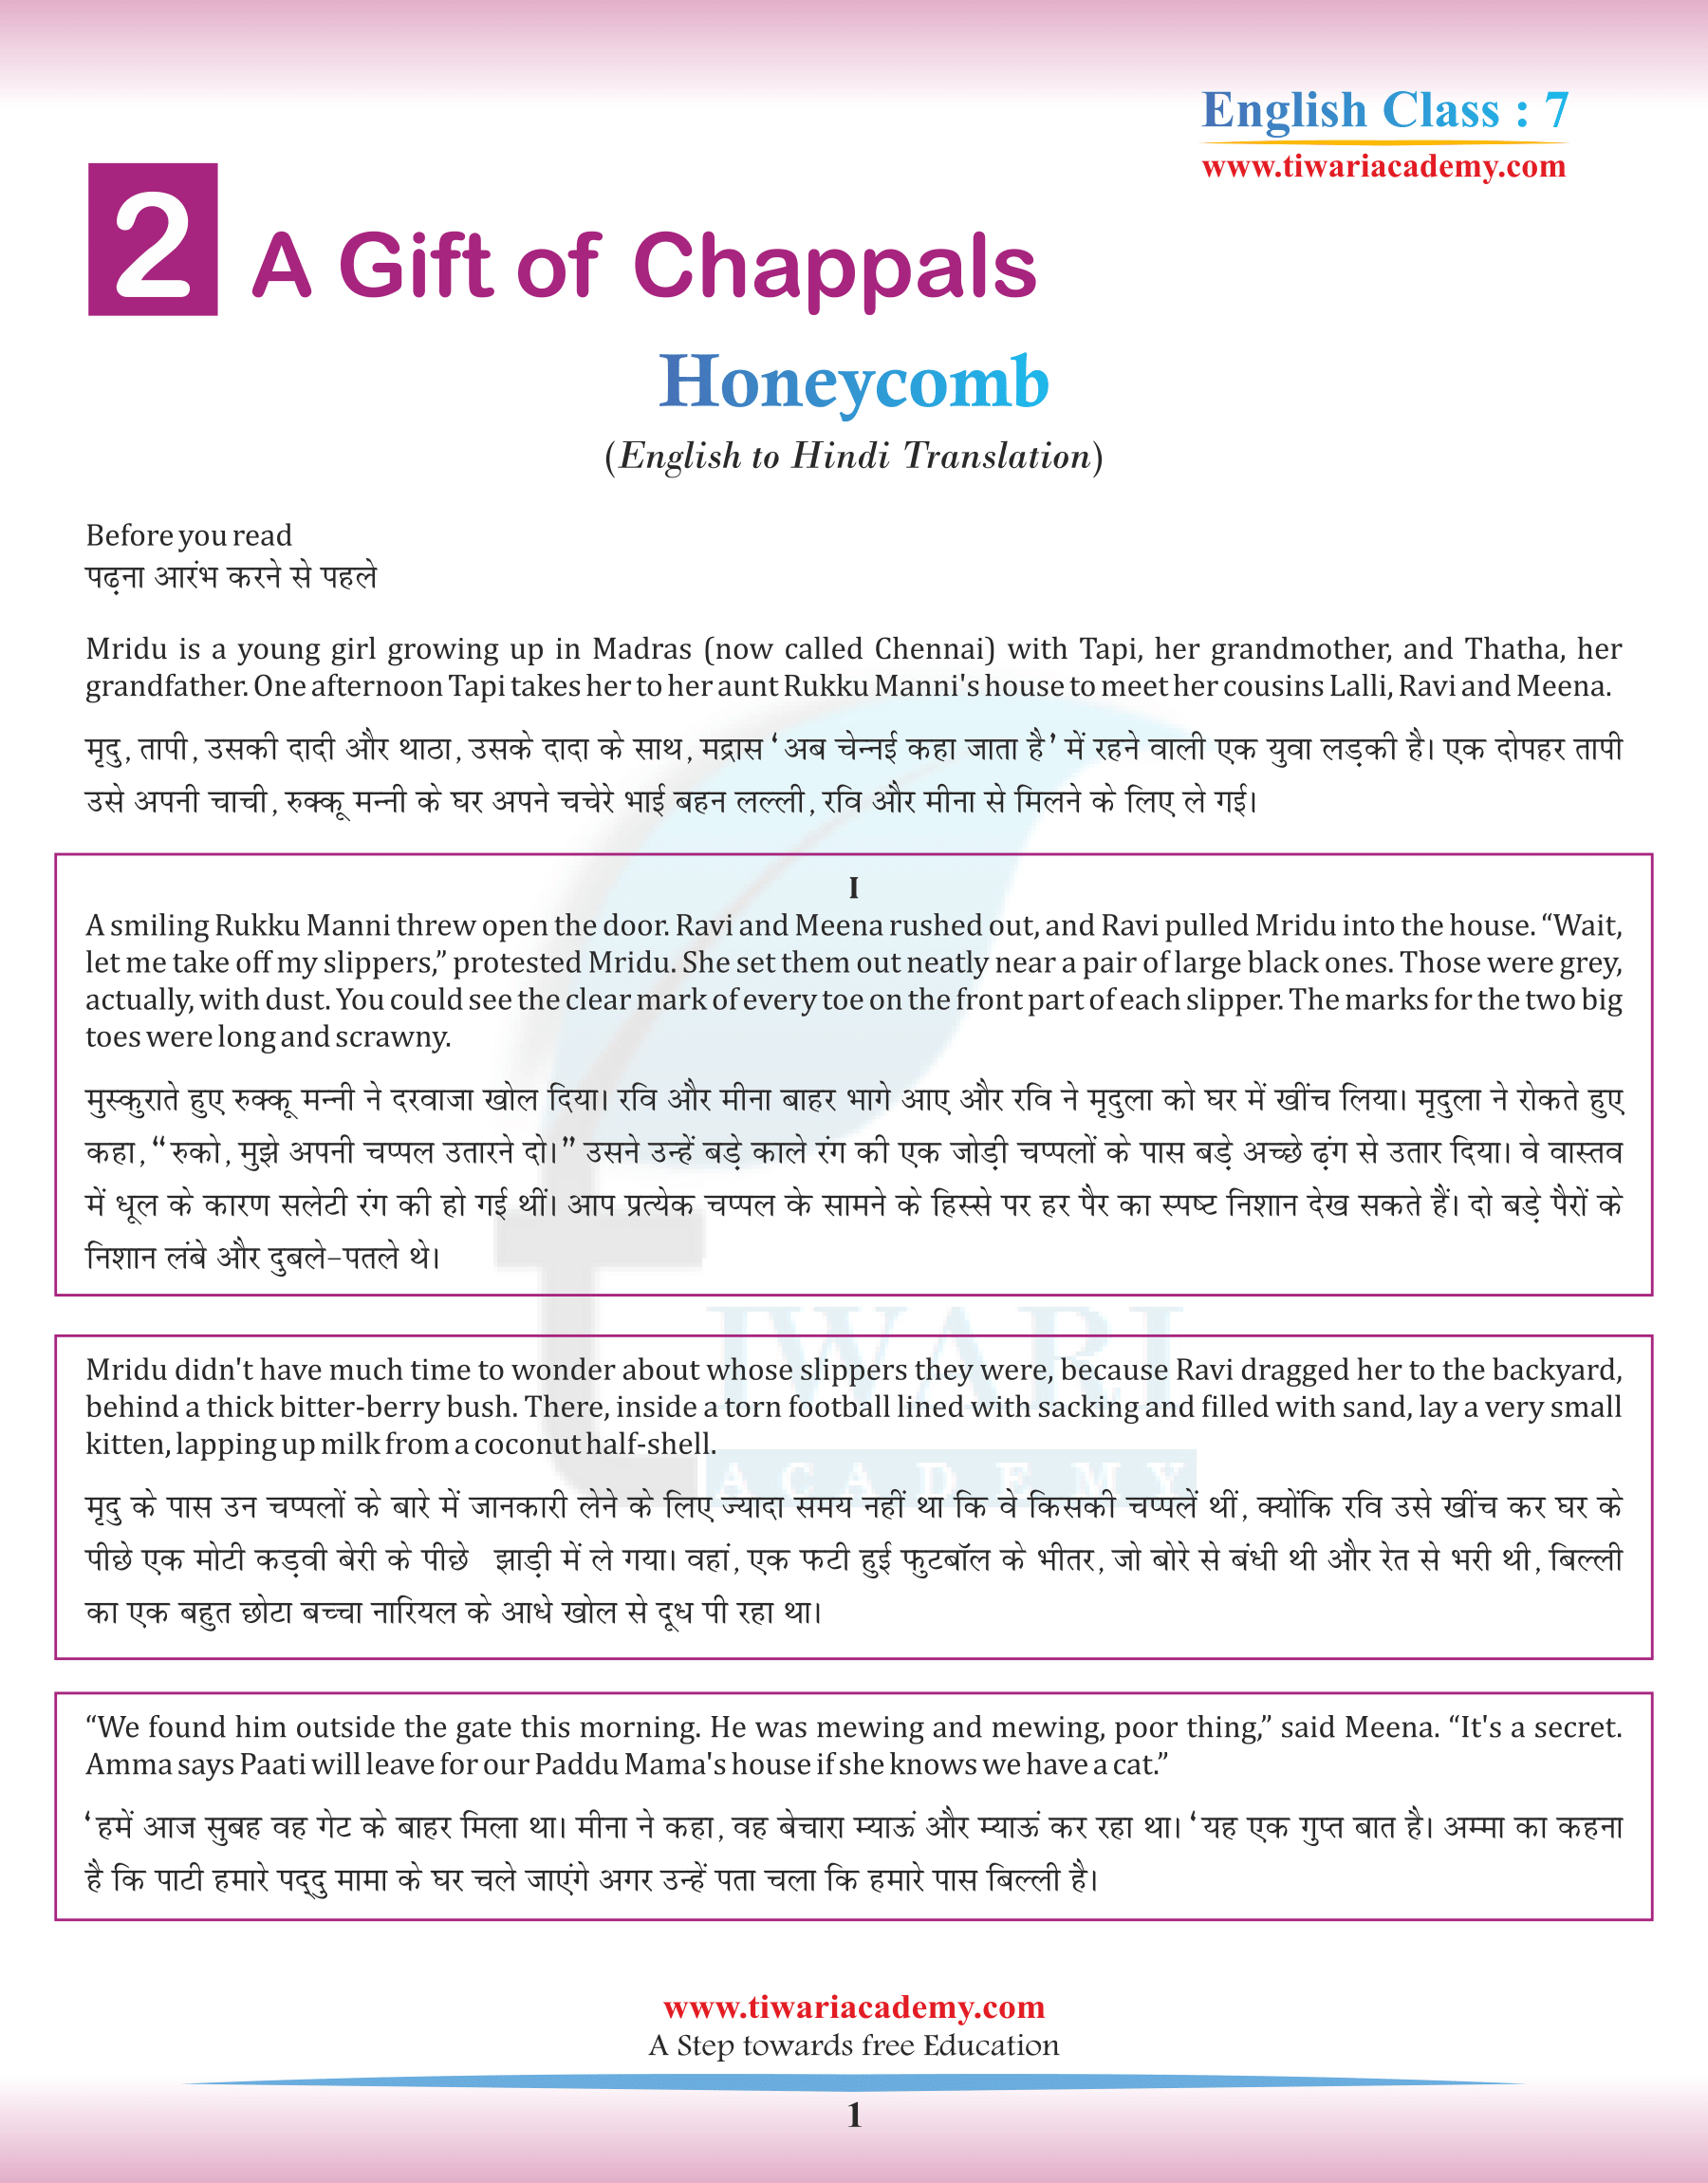 Class 7 English Honeycomb Chapter 2 A Gift of Chappals in Hindi Medium